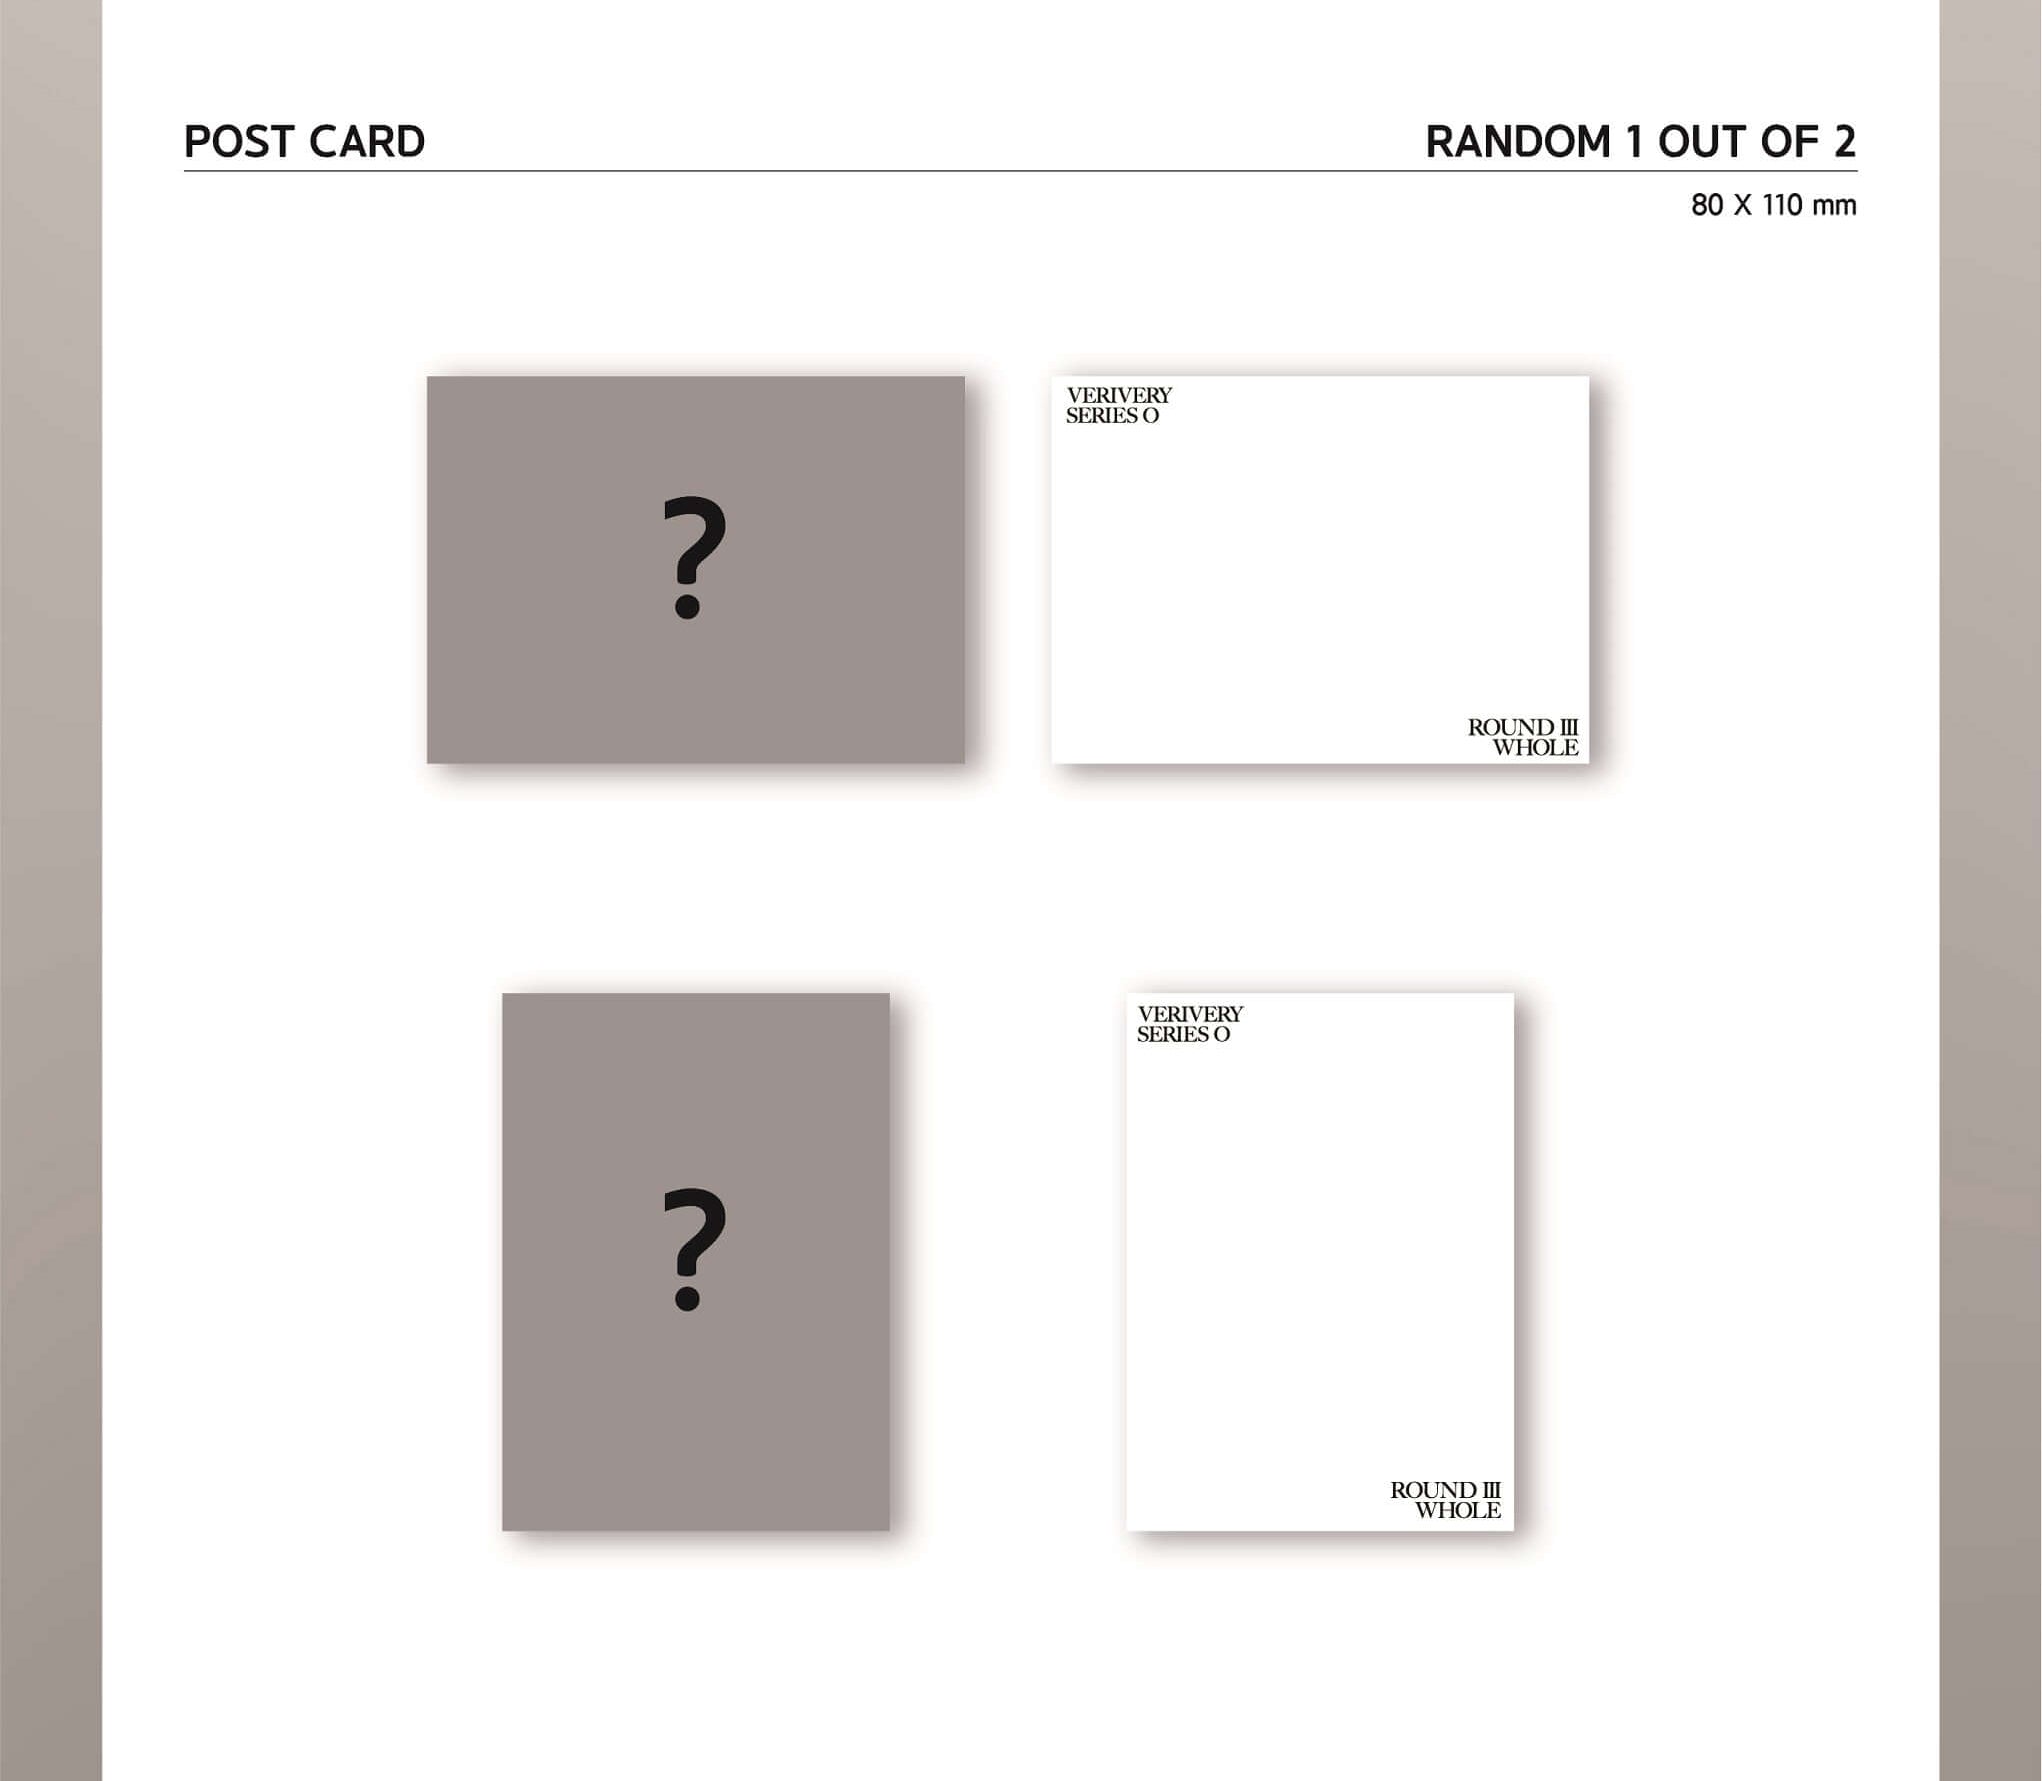 VERIVERY Series 'O' Round 3: Whole - Platform Version Inclusions Postcard